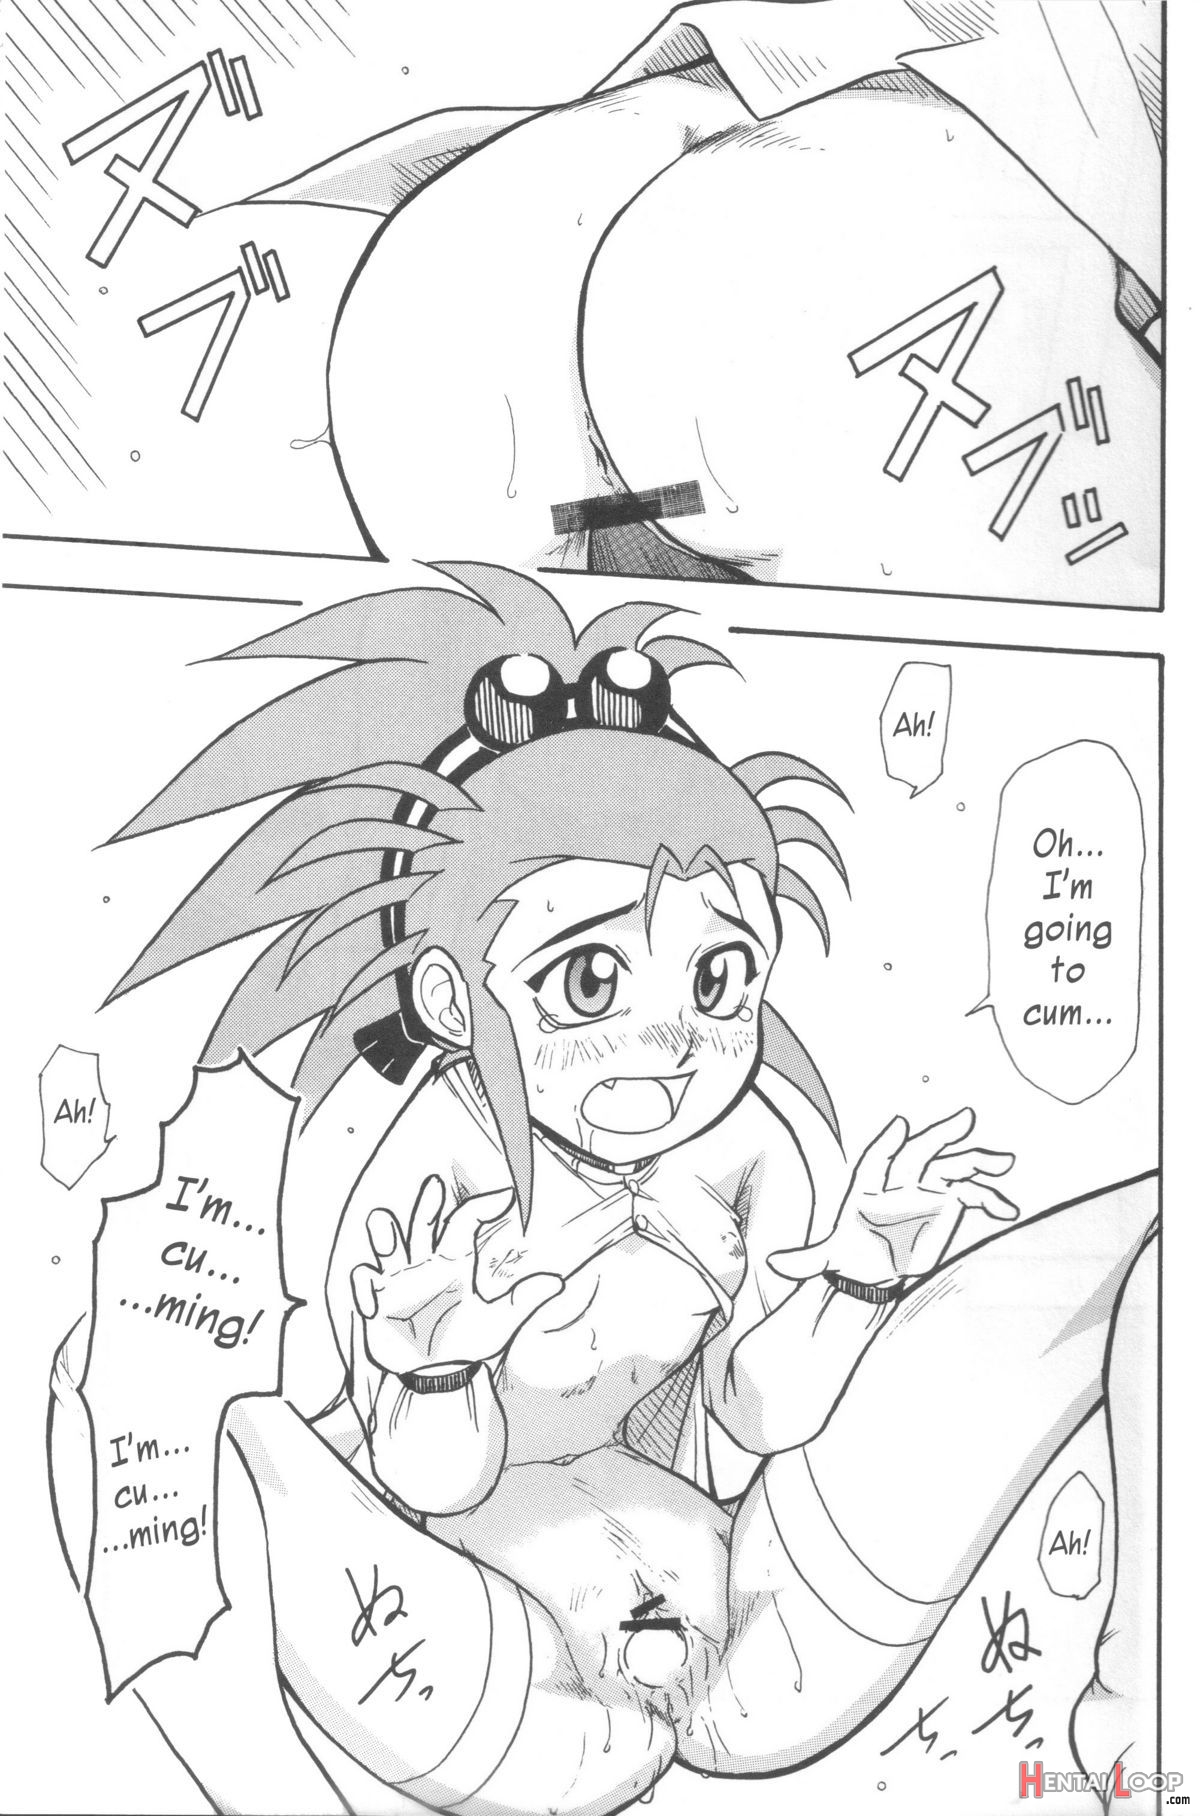 Kani-san 2 page 18